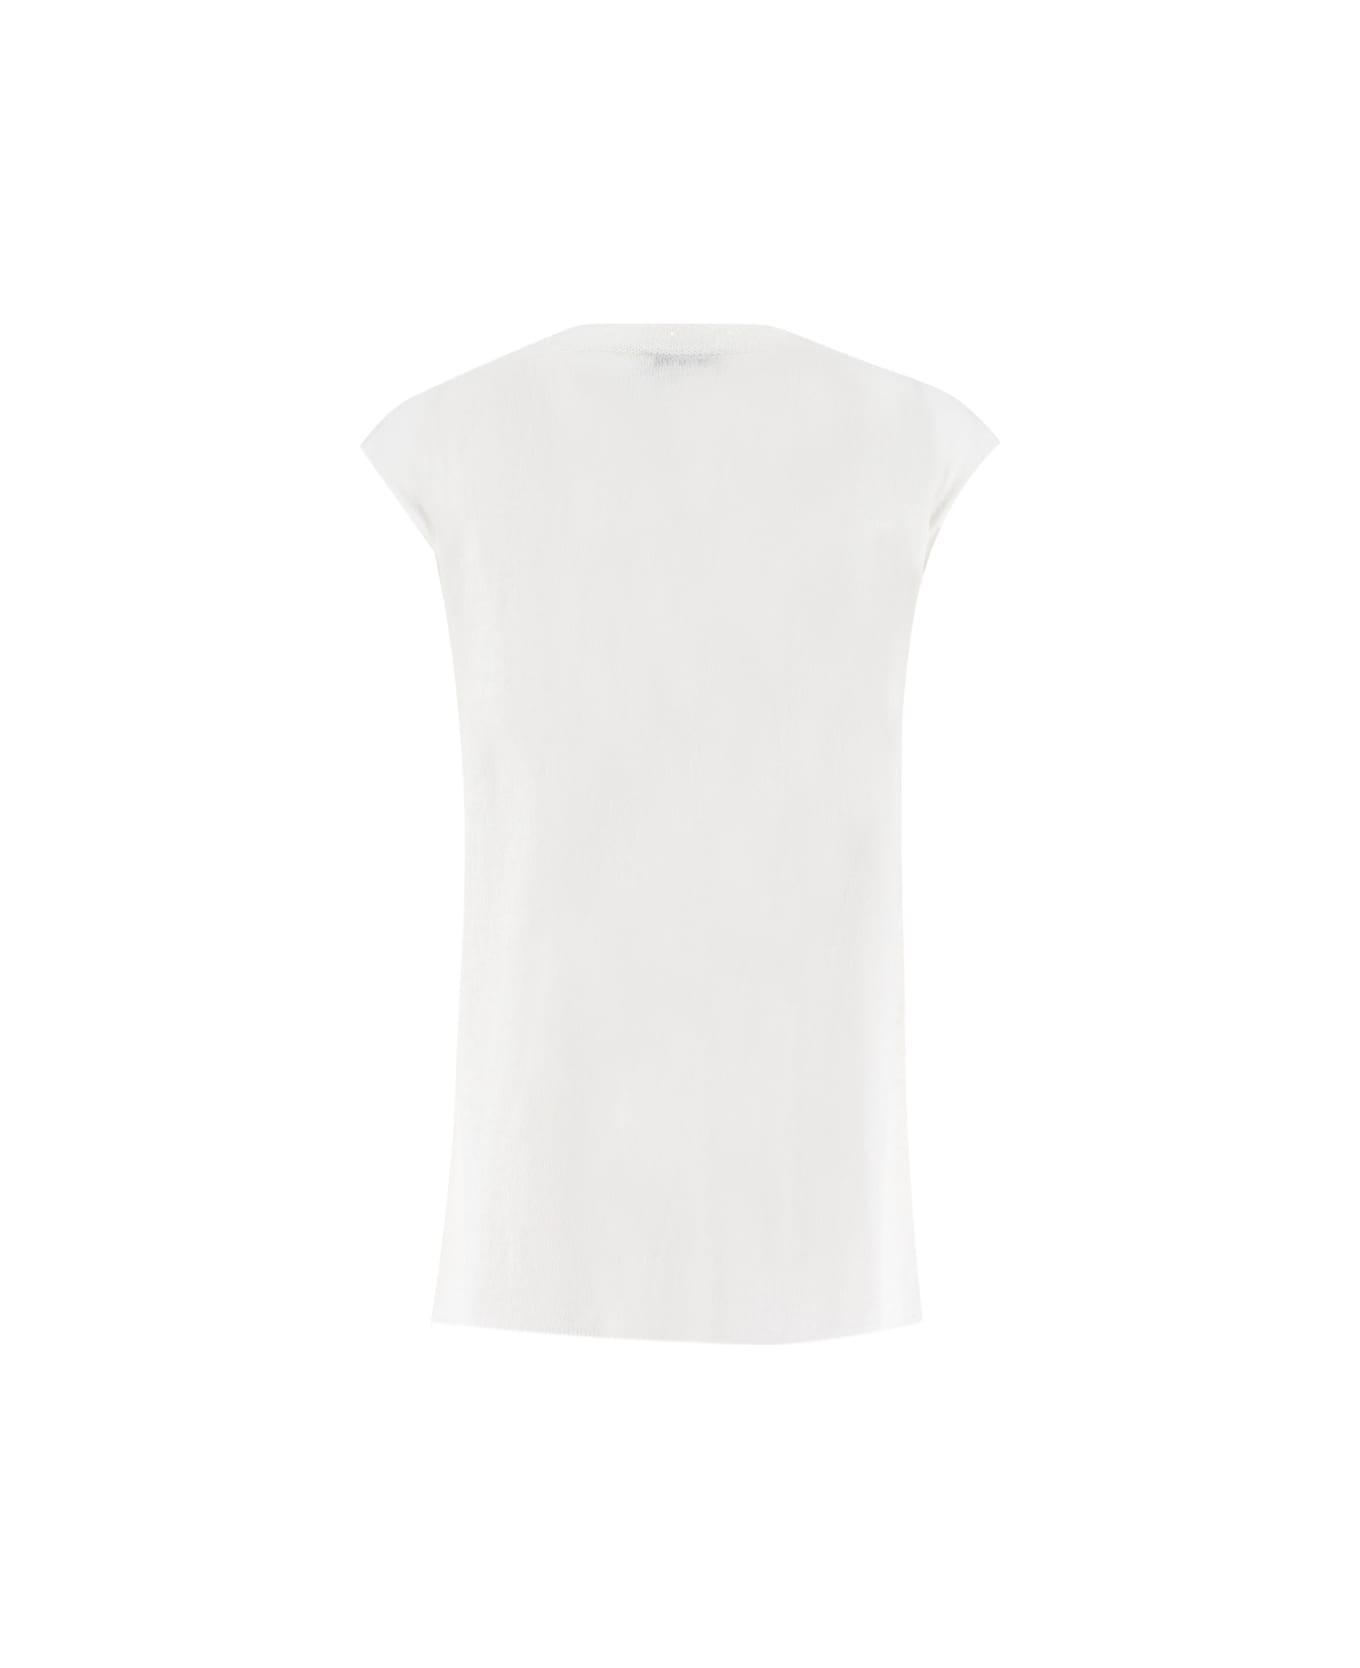 Le Tricot Perugia T-shirt - WHITE Tシャツ